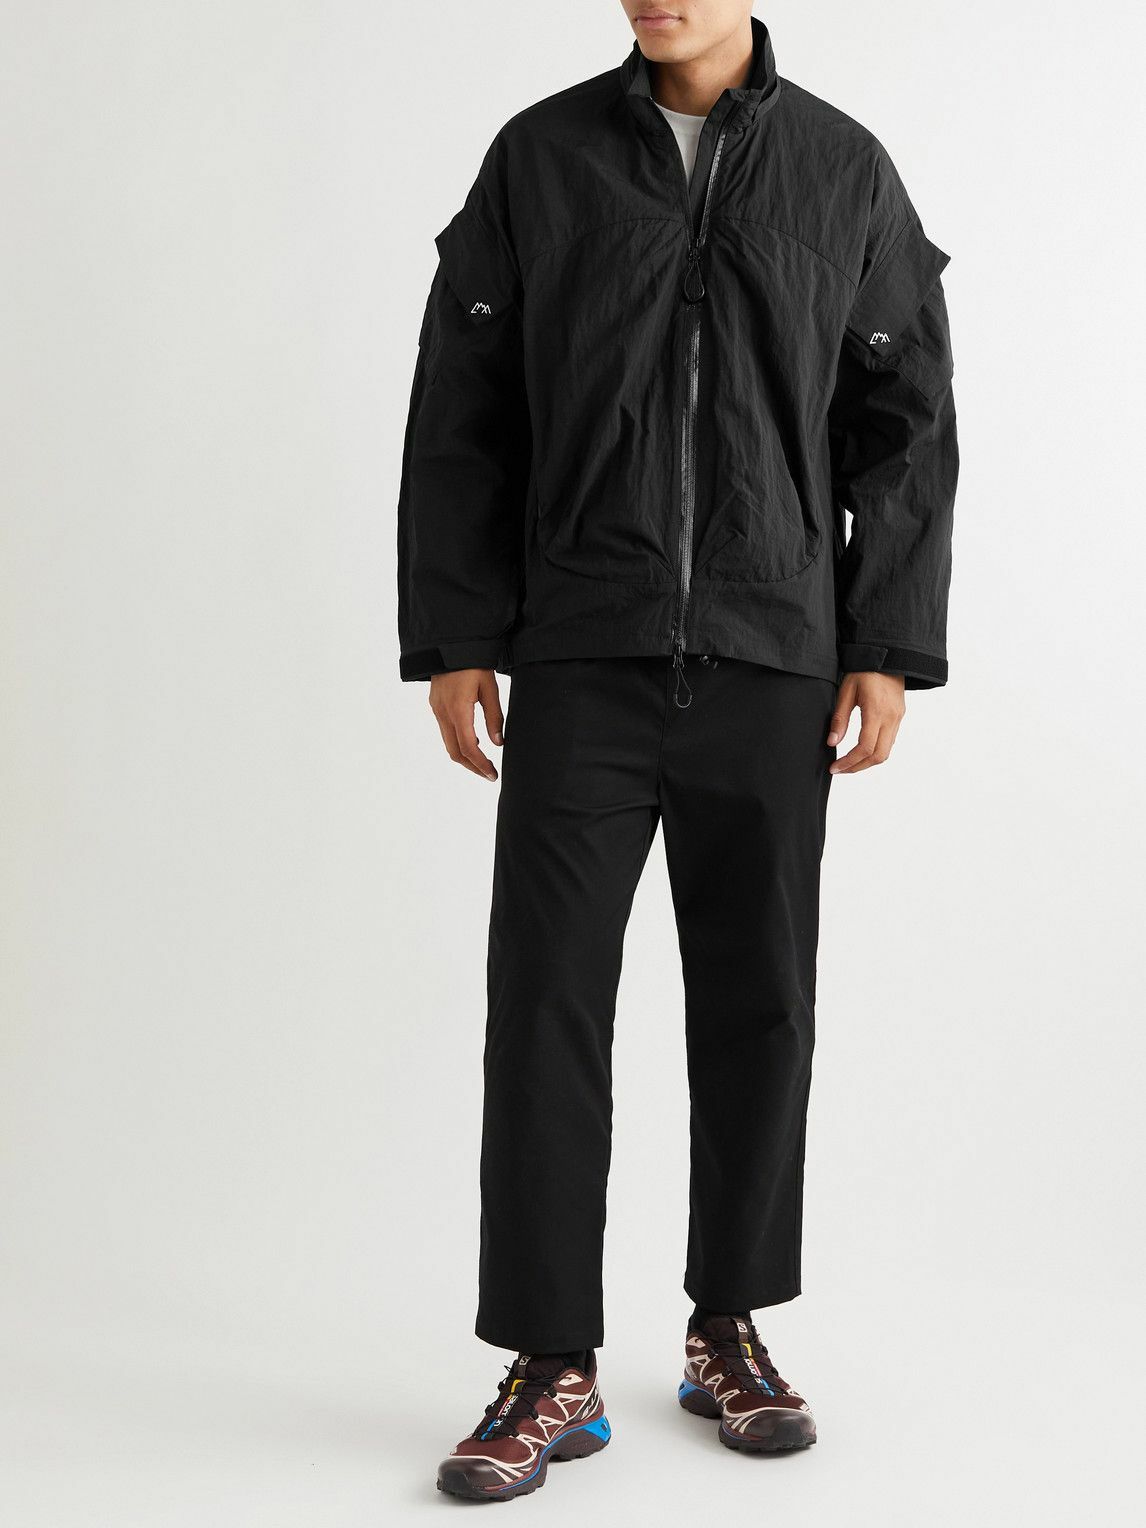 Comfy Outdoor Garment - Sling Shot Nylon-Ripstop Jacket - Black